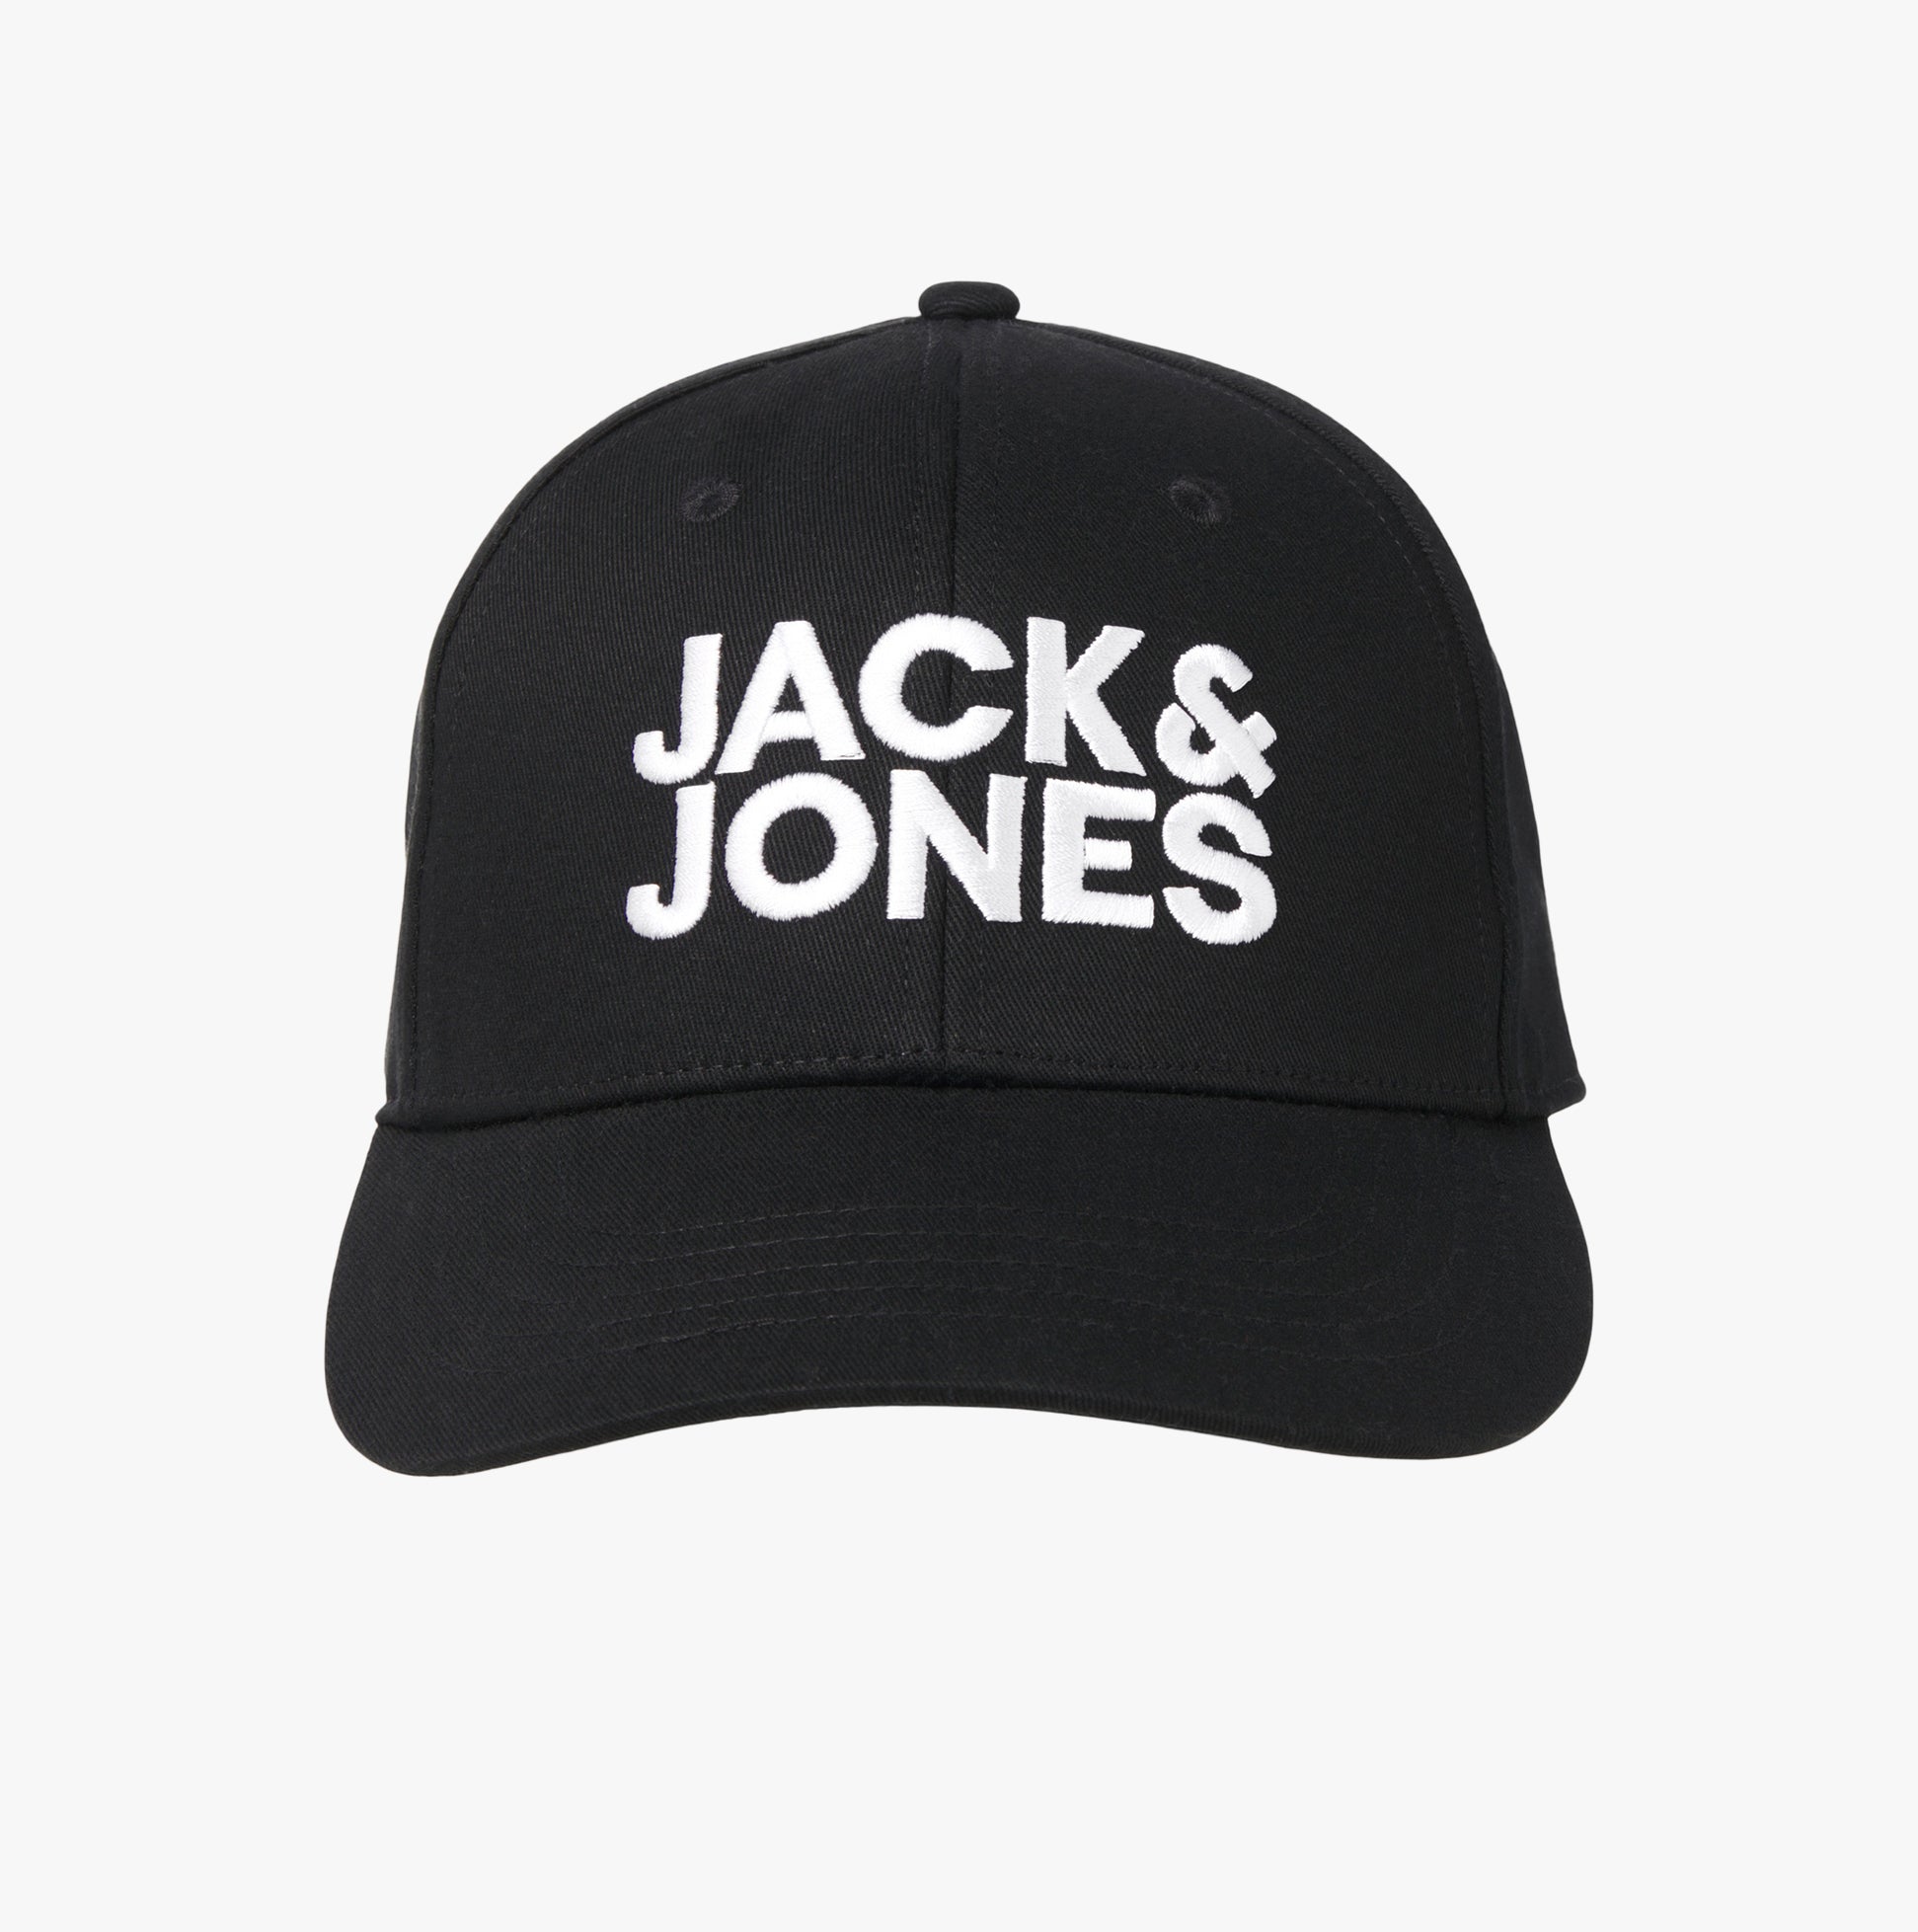 Jack&Jones-[12254296-BLK]-Black-2.jpg